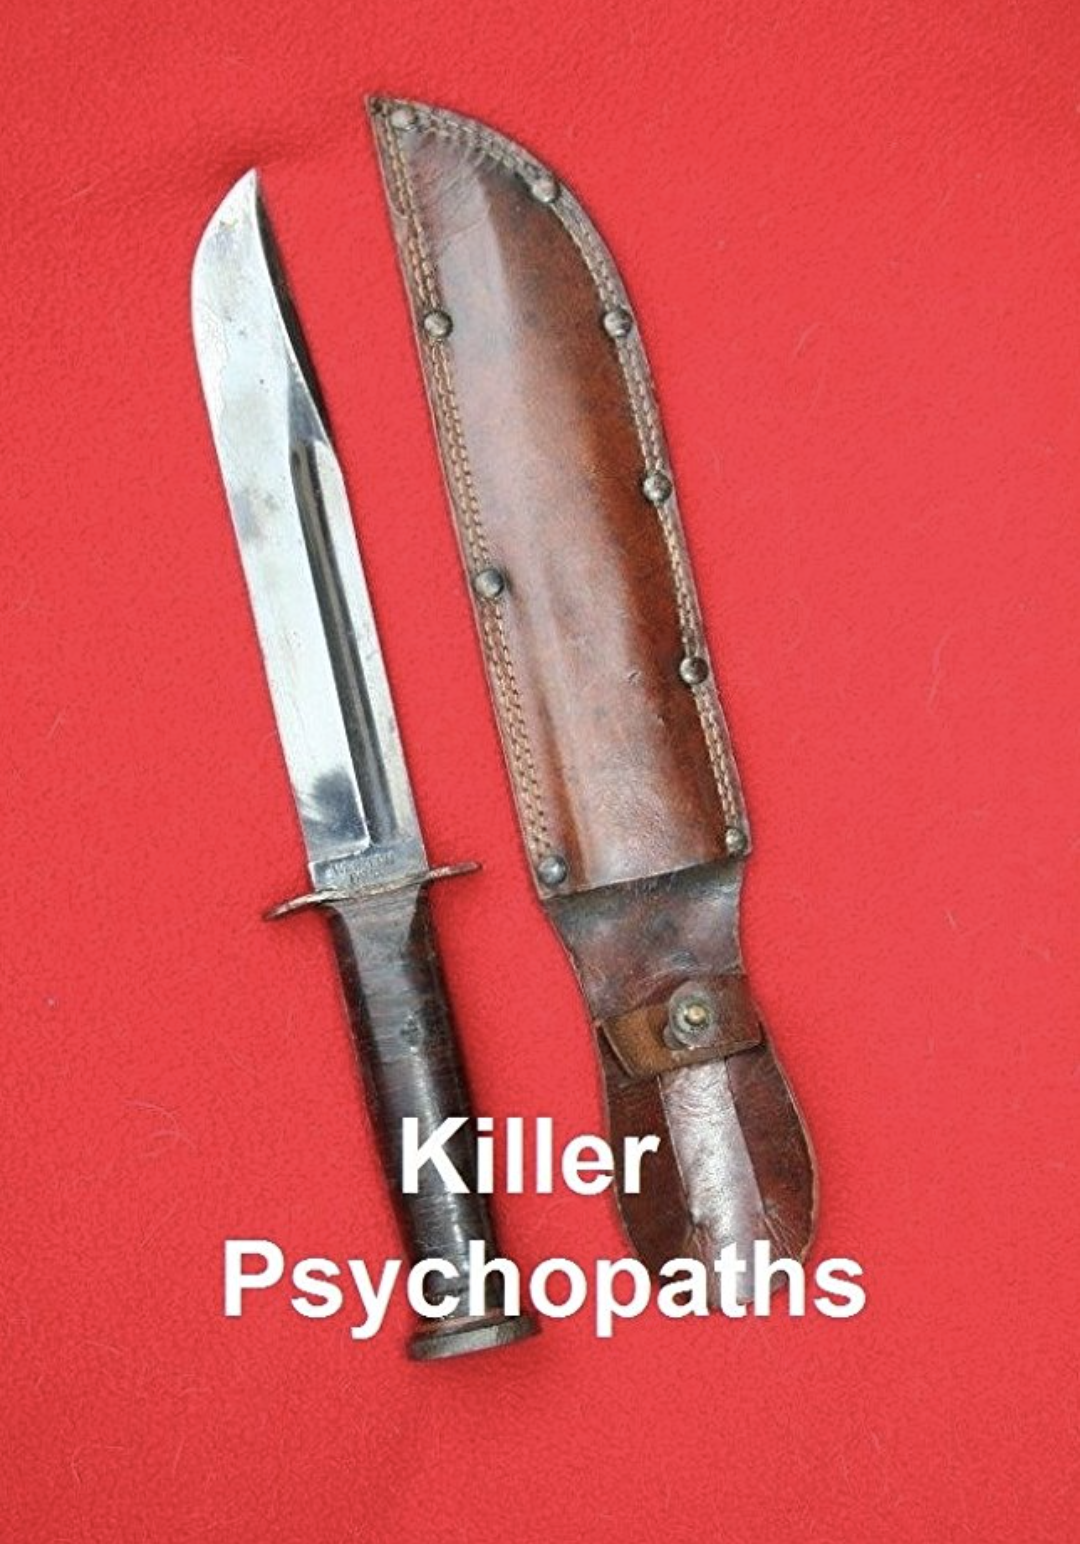 Killer psychopaths - Channel 5